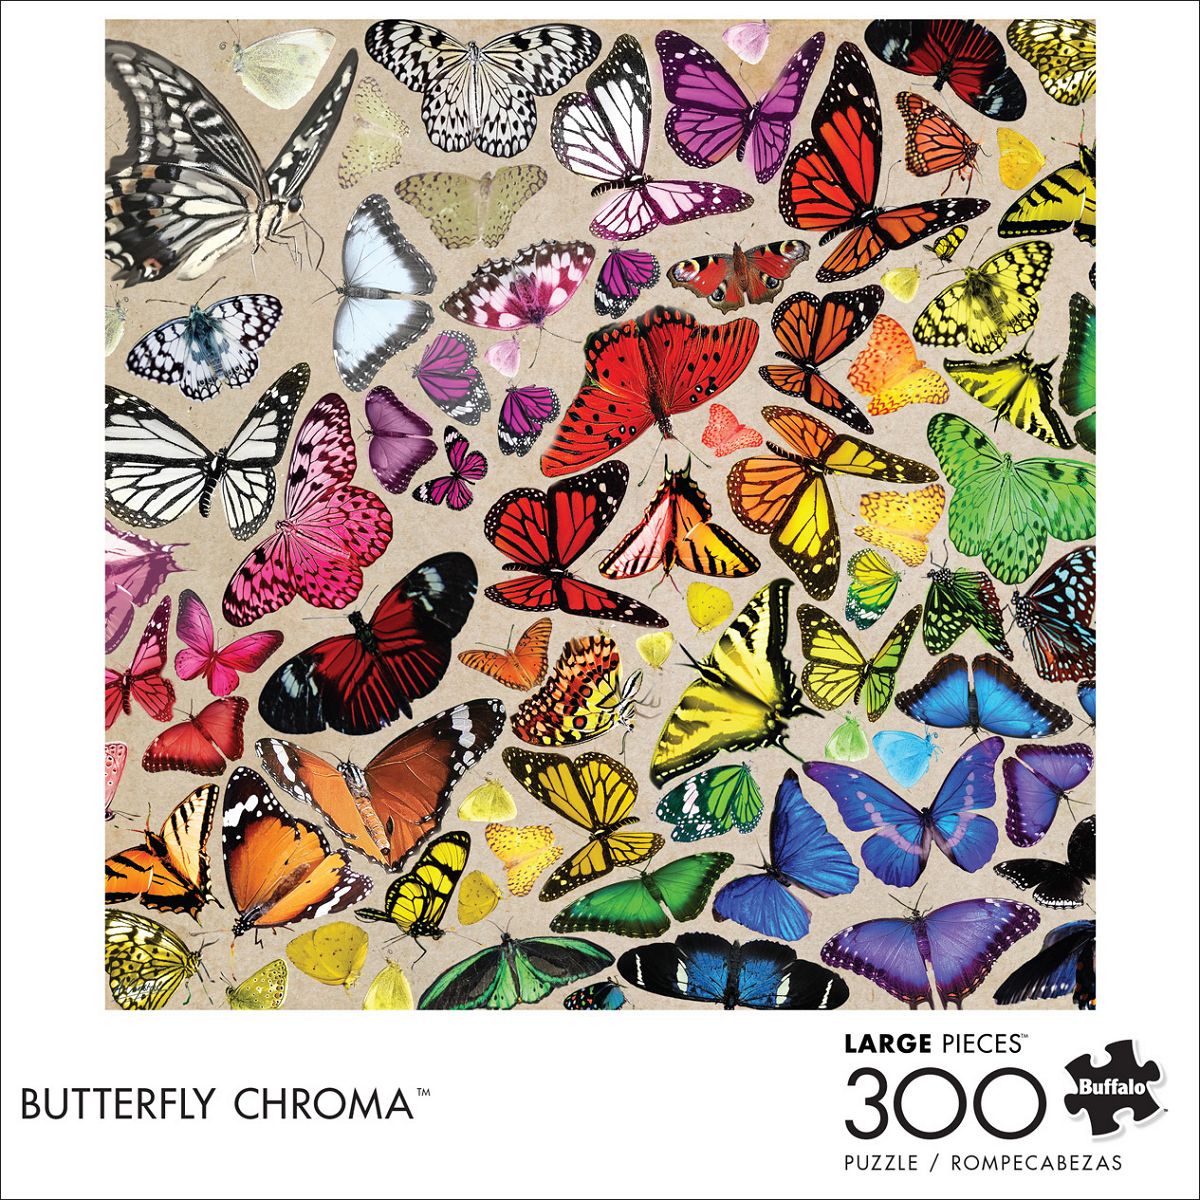 Butterfly Chroma